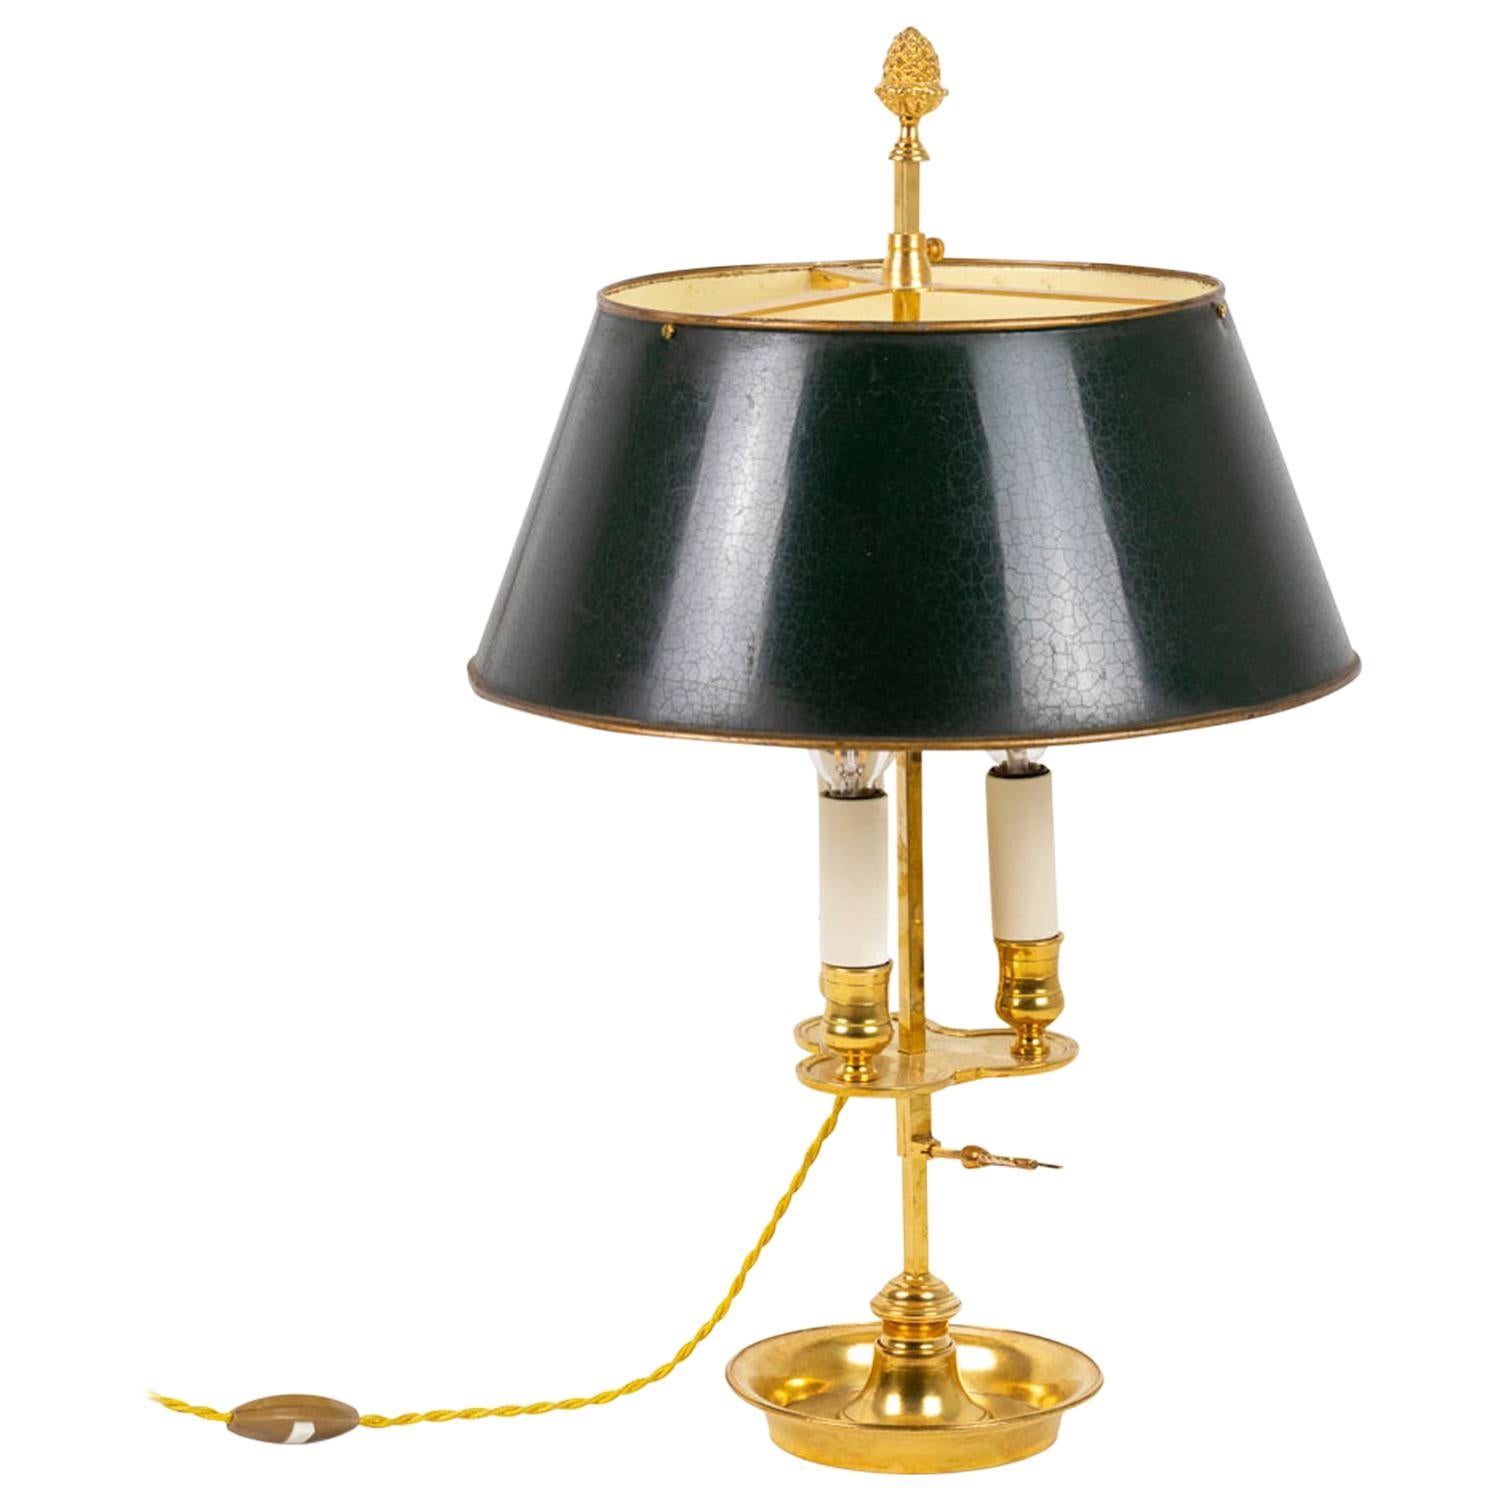 Lampe bouillotte de style Louis XVI en bronze doré, circa 1880